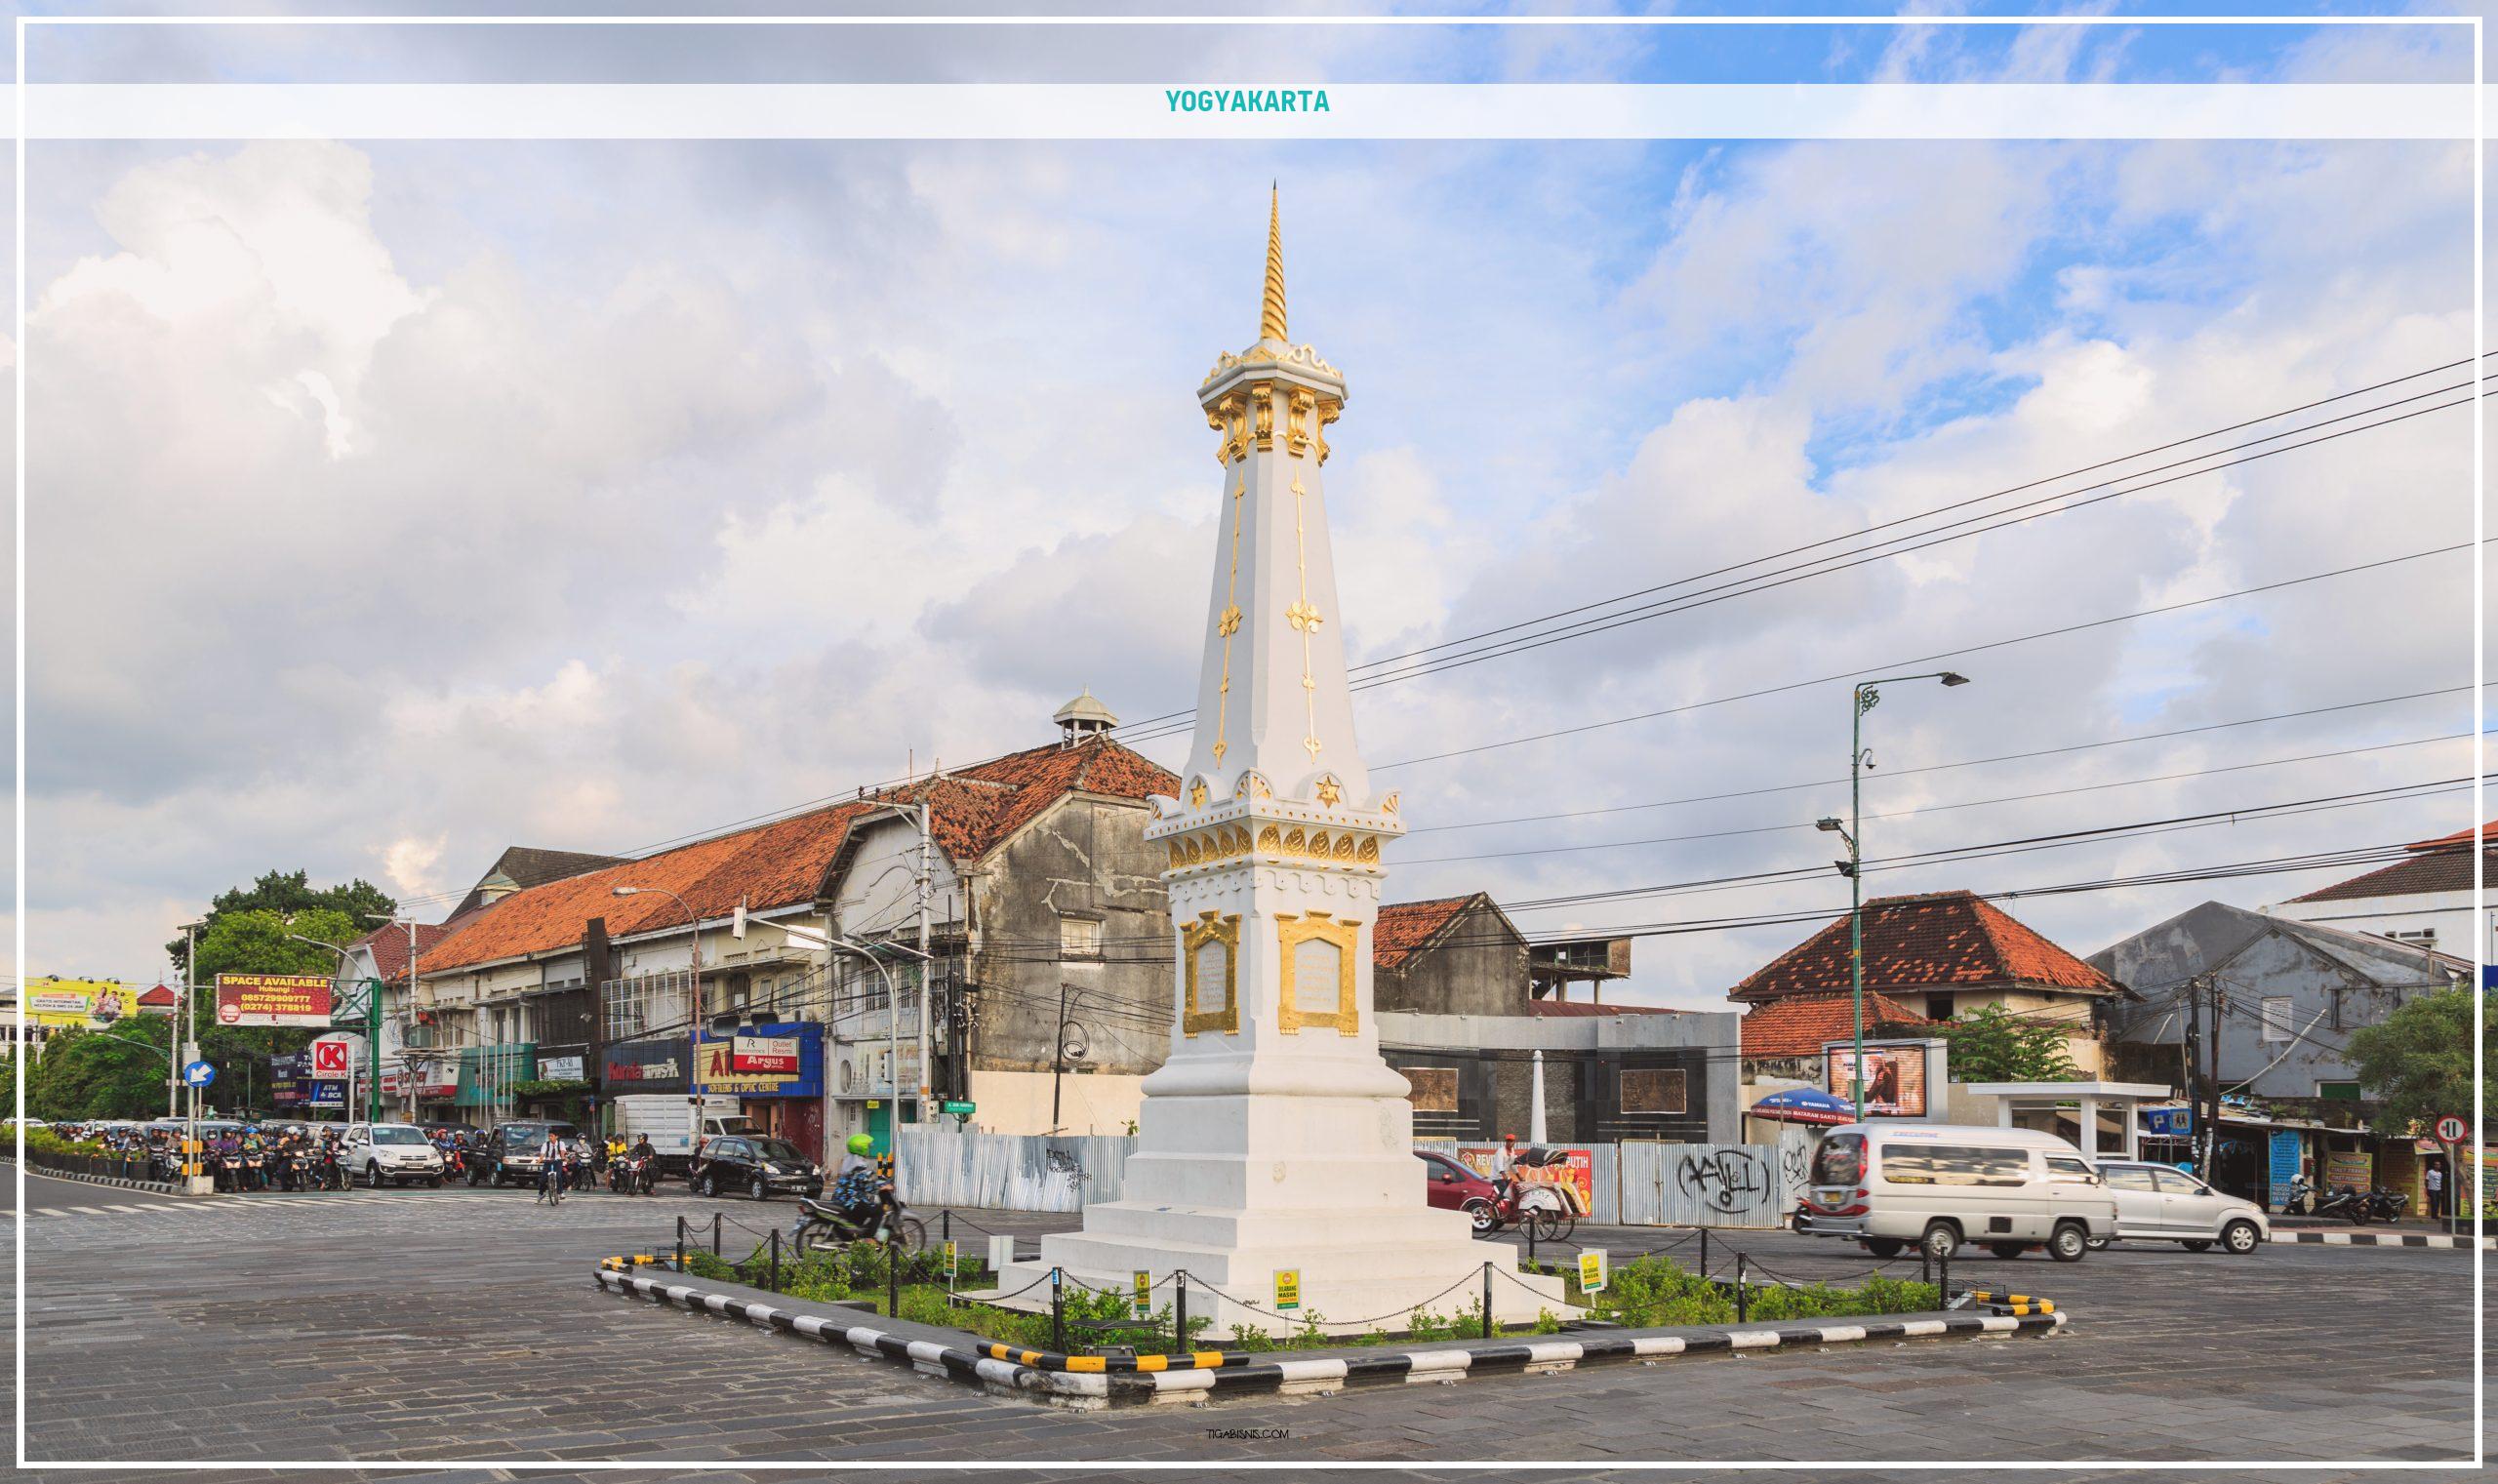 Info Lowongan Untuk Wilayah Yogyakarta Saat Ini. Sumber : Https://en.wikipedia.org/wiki/yogyakarta